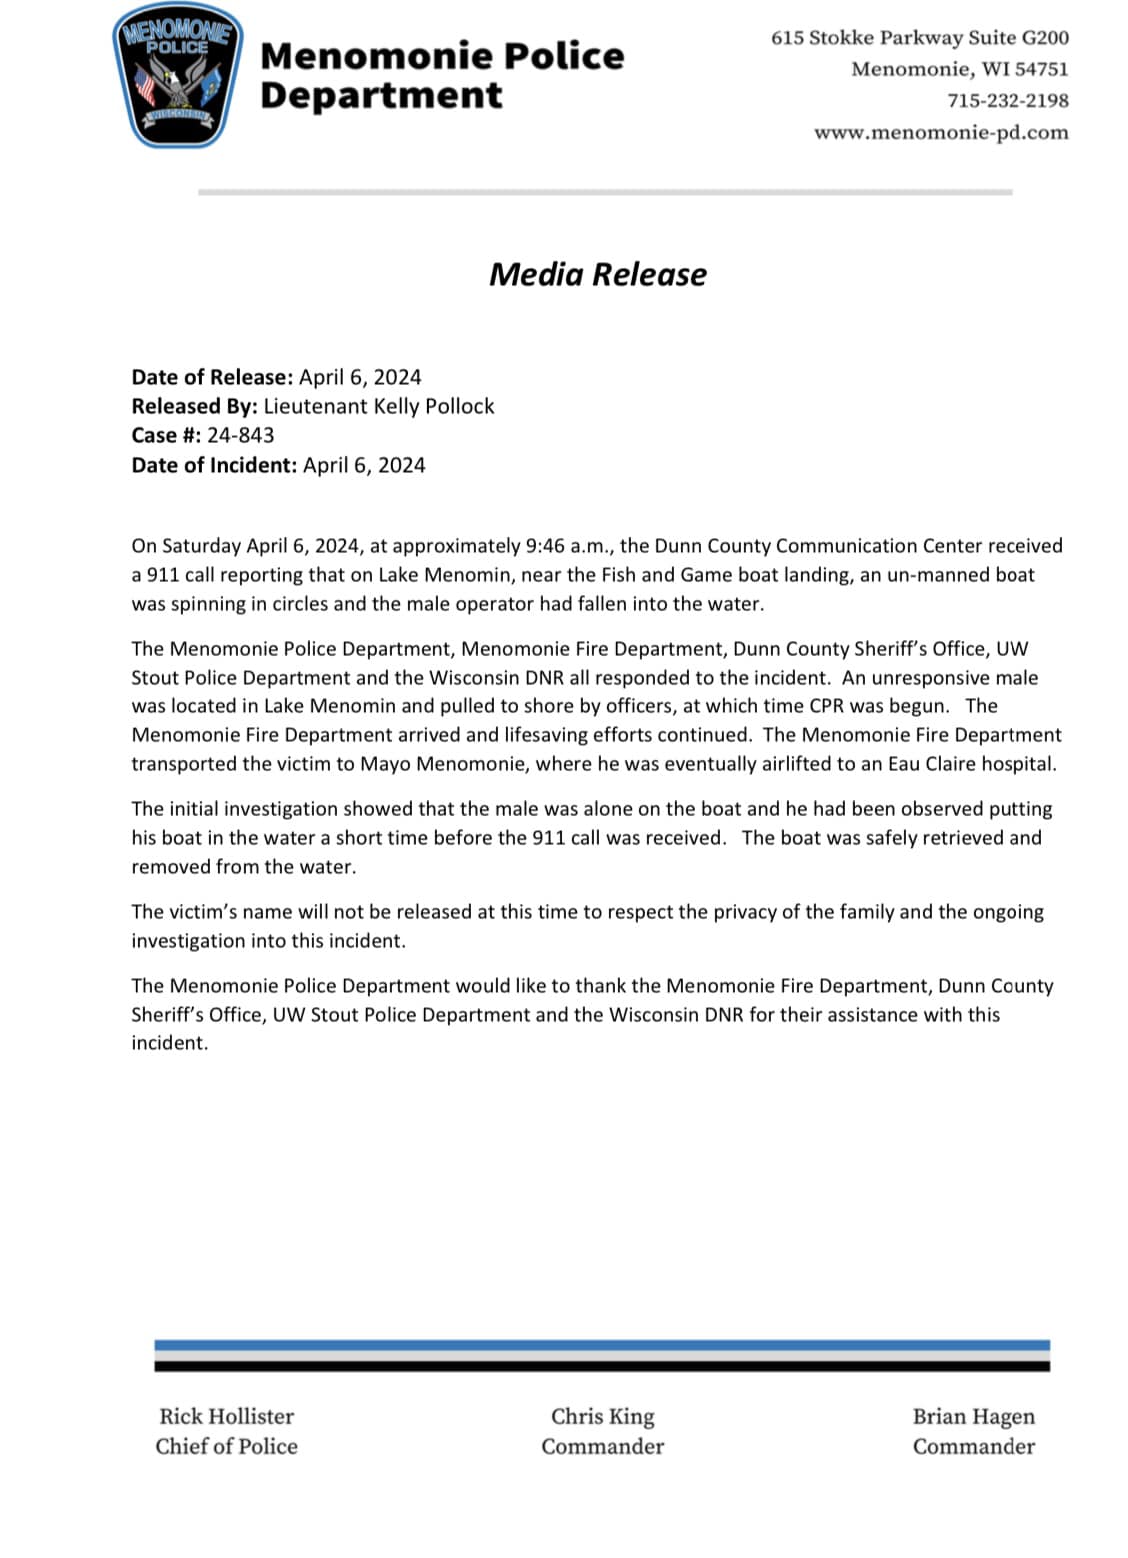 Menomonie Police Press Release